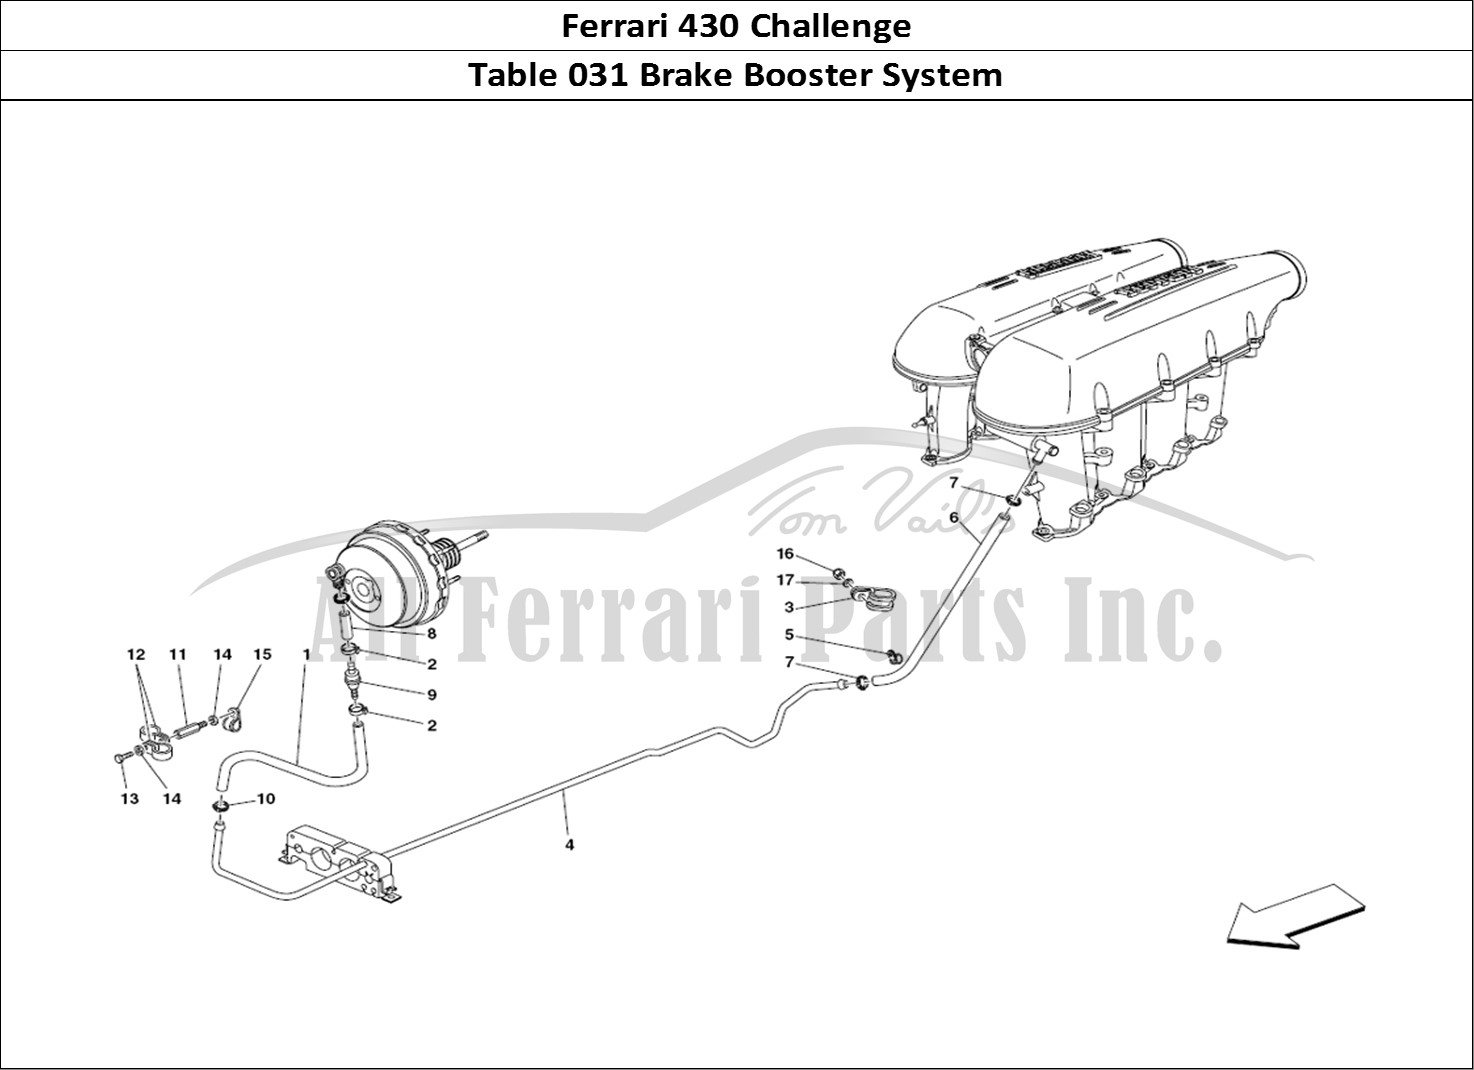 Ferrari Parts Ferrari 430 Challenge (2006) Page 031 brake booster system